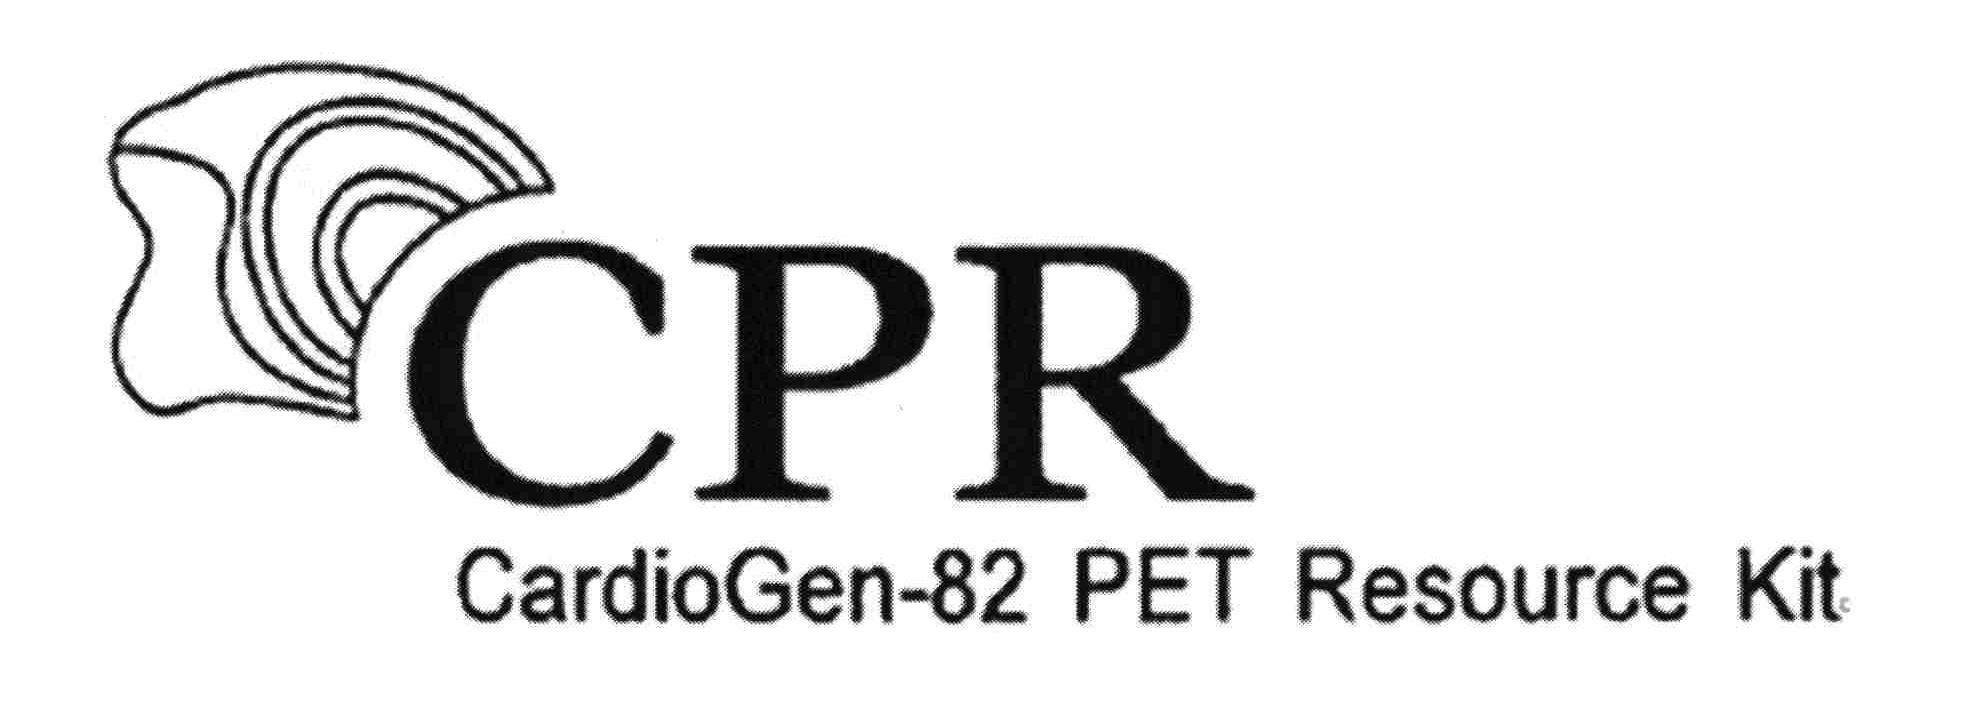  CPR CARDIOGEN-82 PET RESOURCE KIT